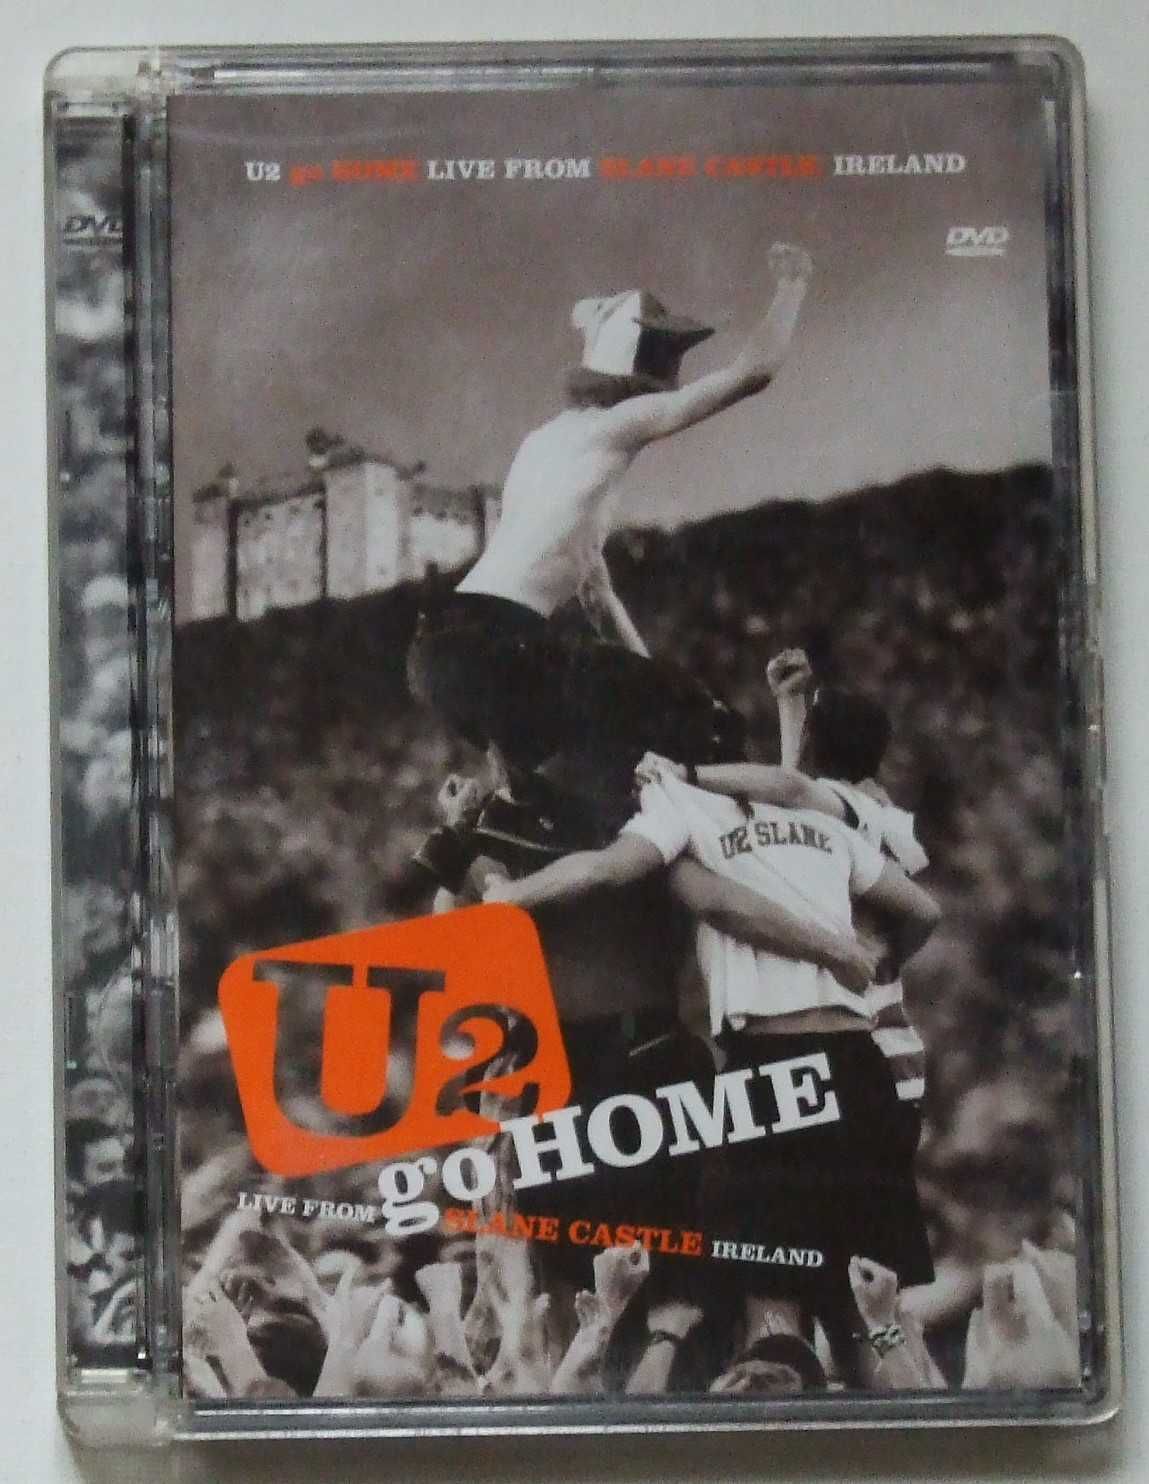 U2 – U2 Go Home (Live From Slane Castle Ireland), DVD